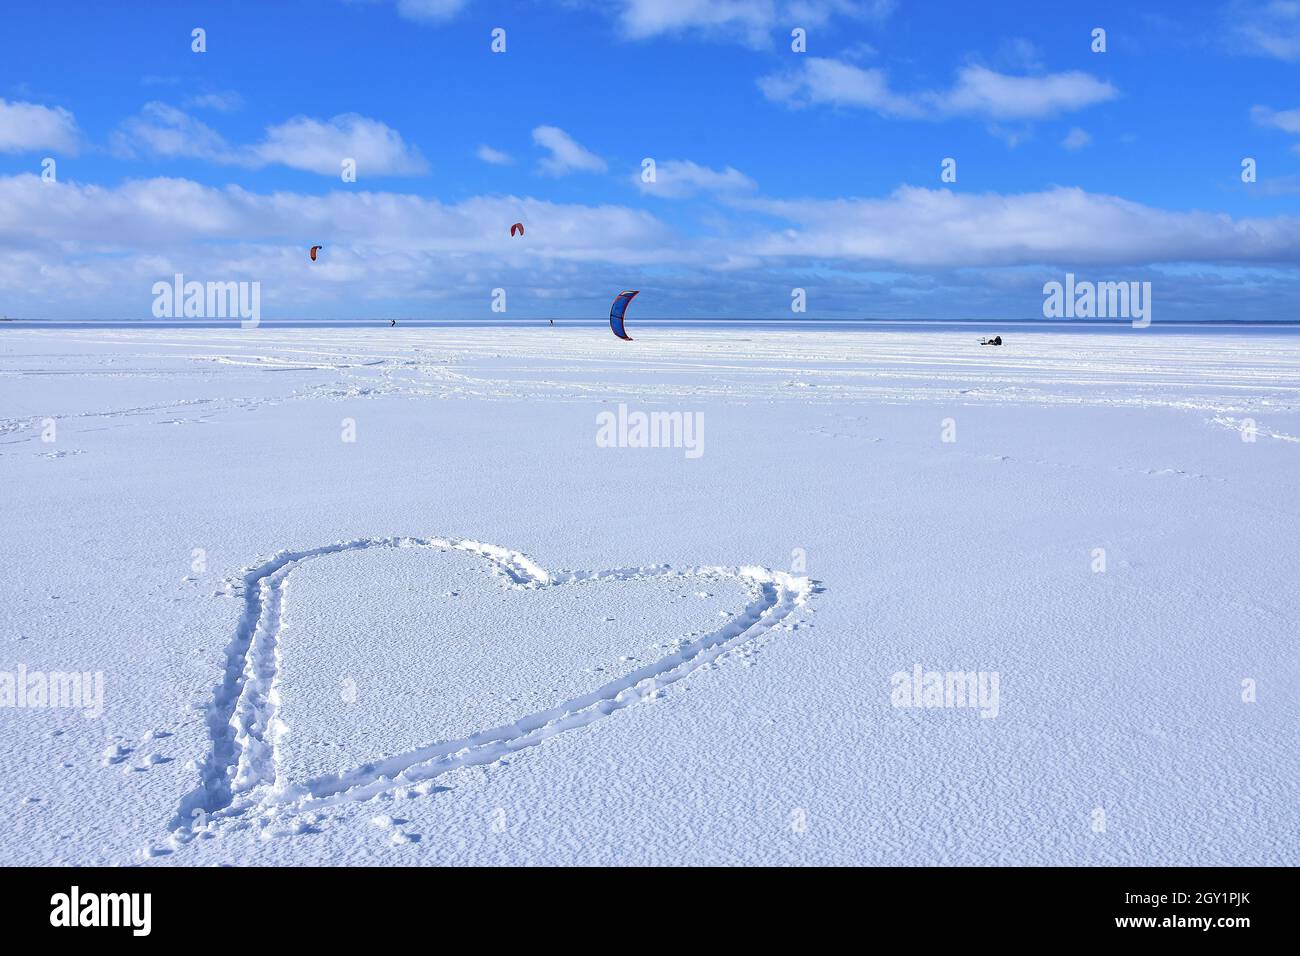 Heart in the snow. Kitesurfing in winter on ice. The Vistula Lagoon in Poland, a beautiful landscape. Stock Photo